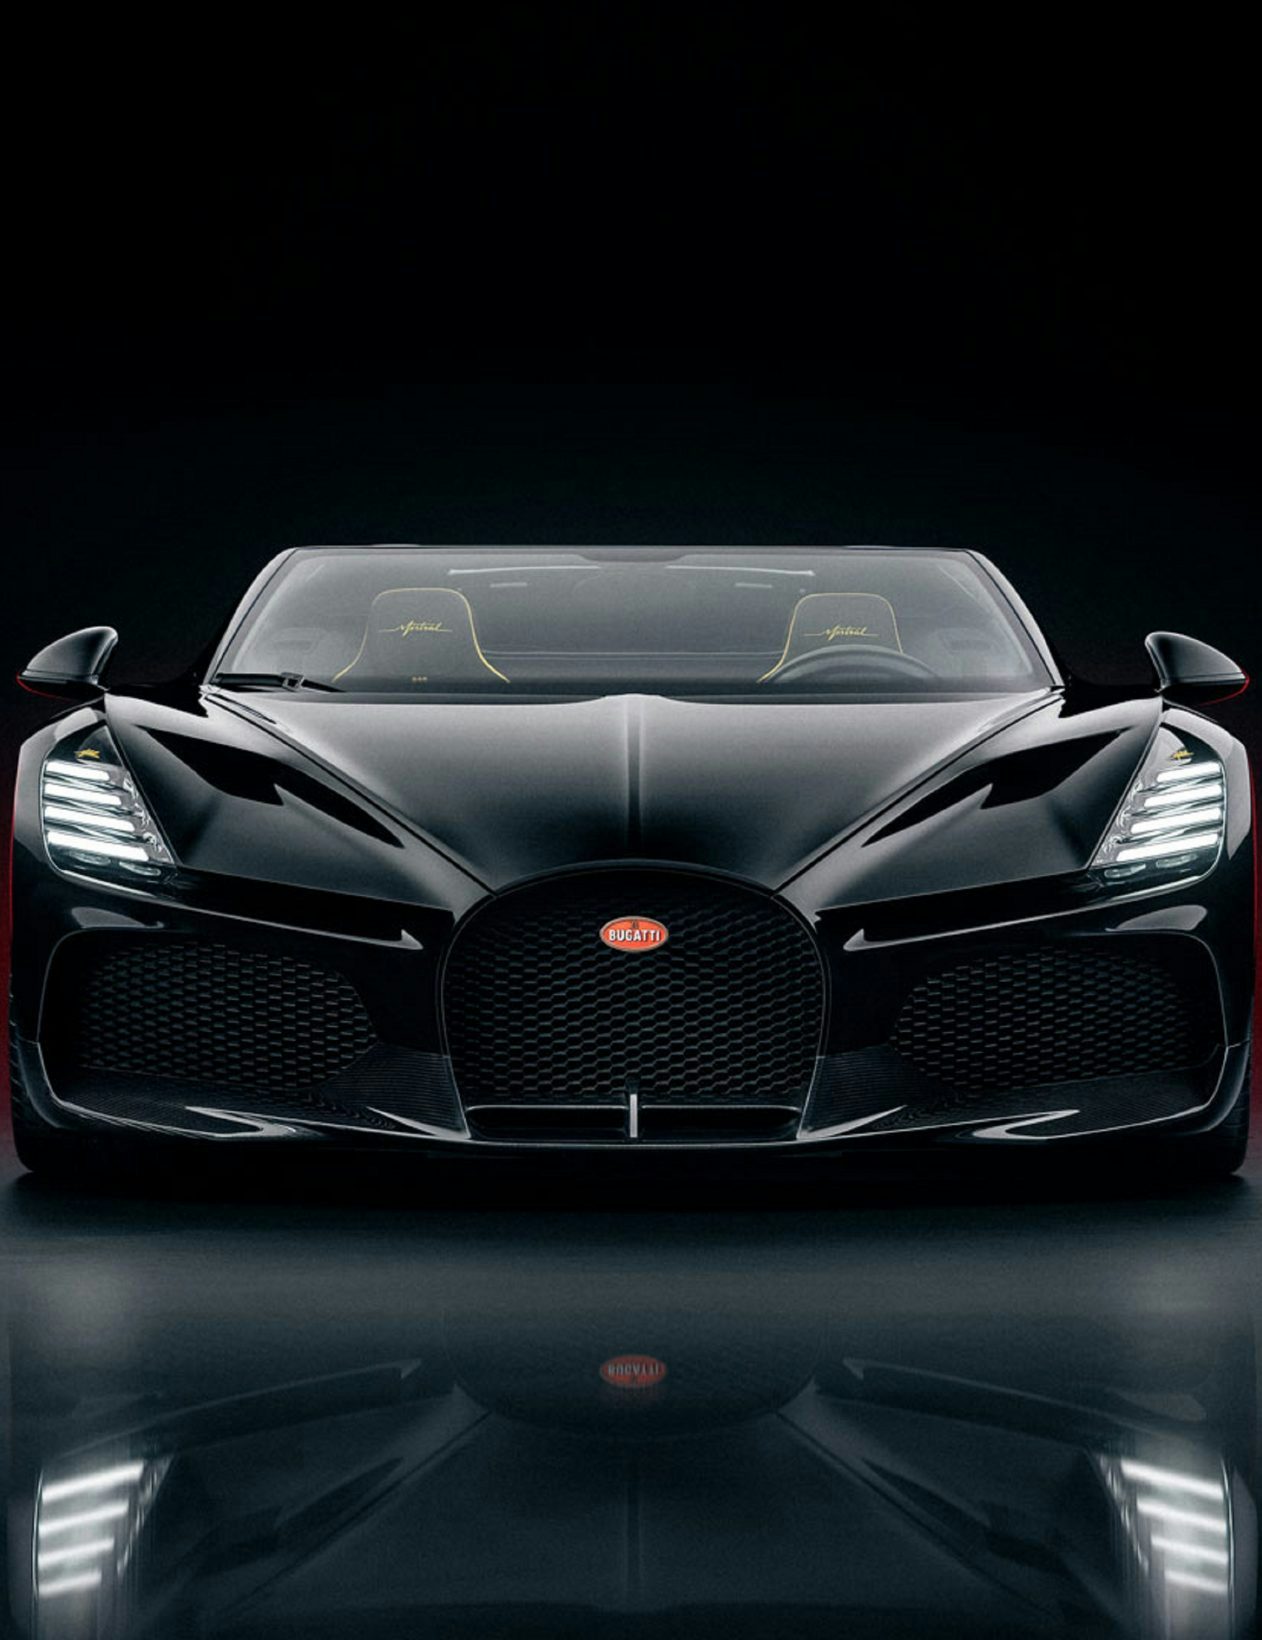 Bugatti invests in luxury residences in Dubai